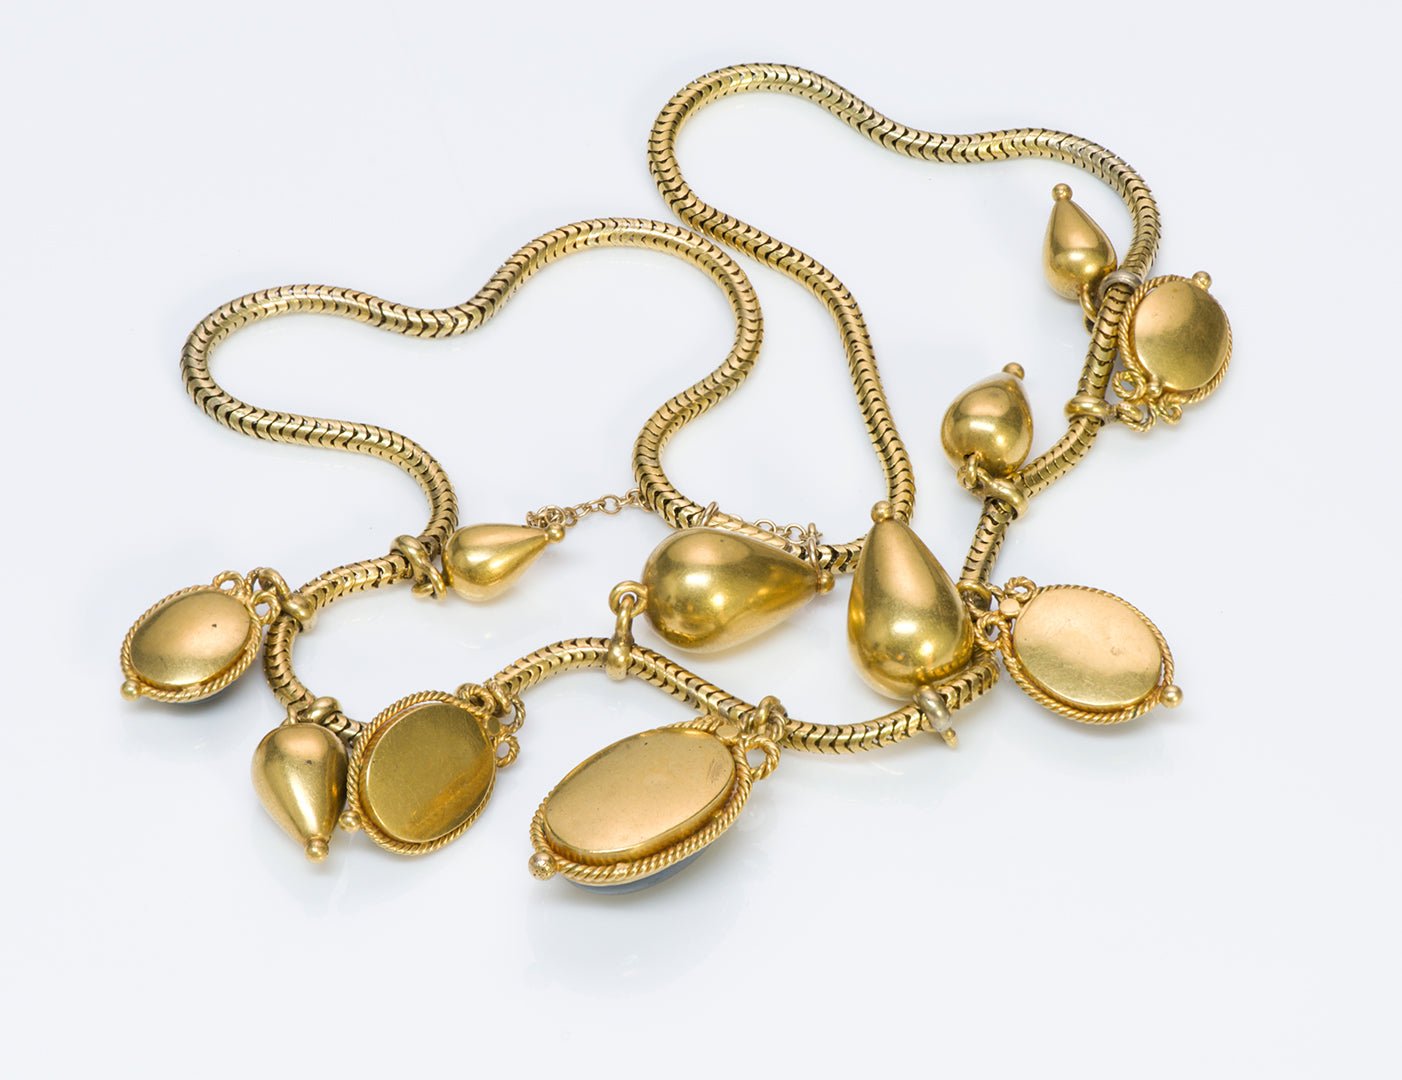 Antique Victorian Gold Cabochon Garnet Necklace